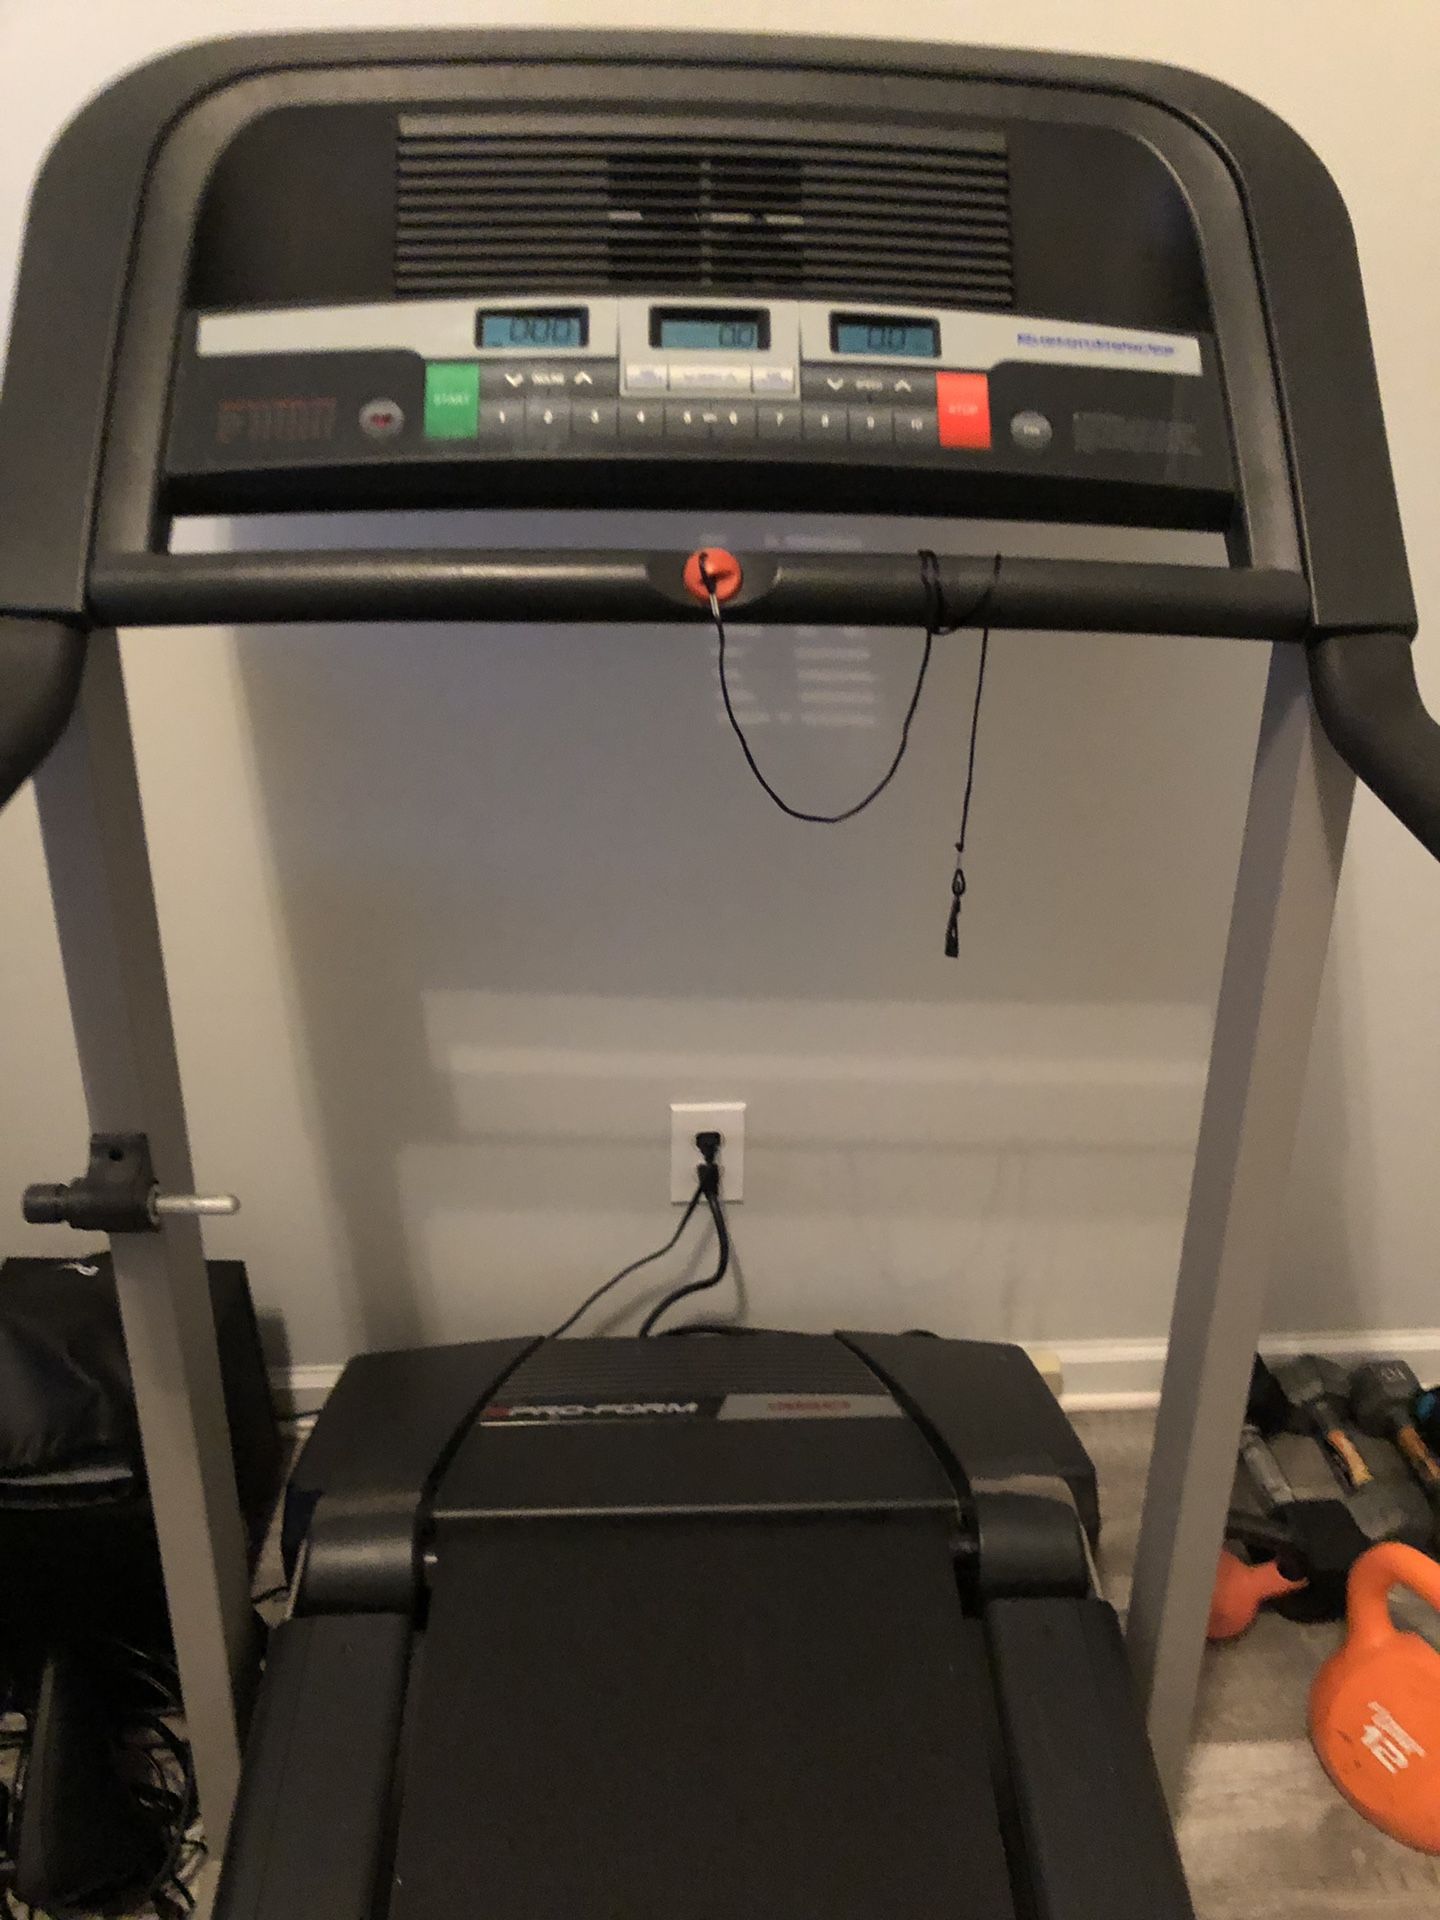 Great working treadmill